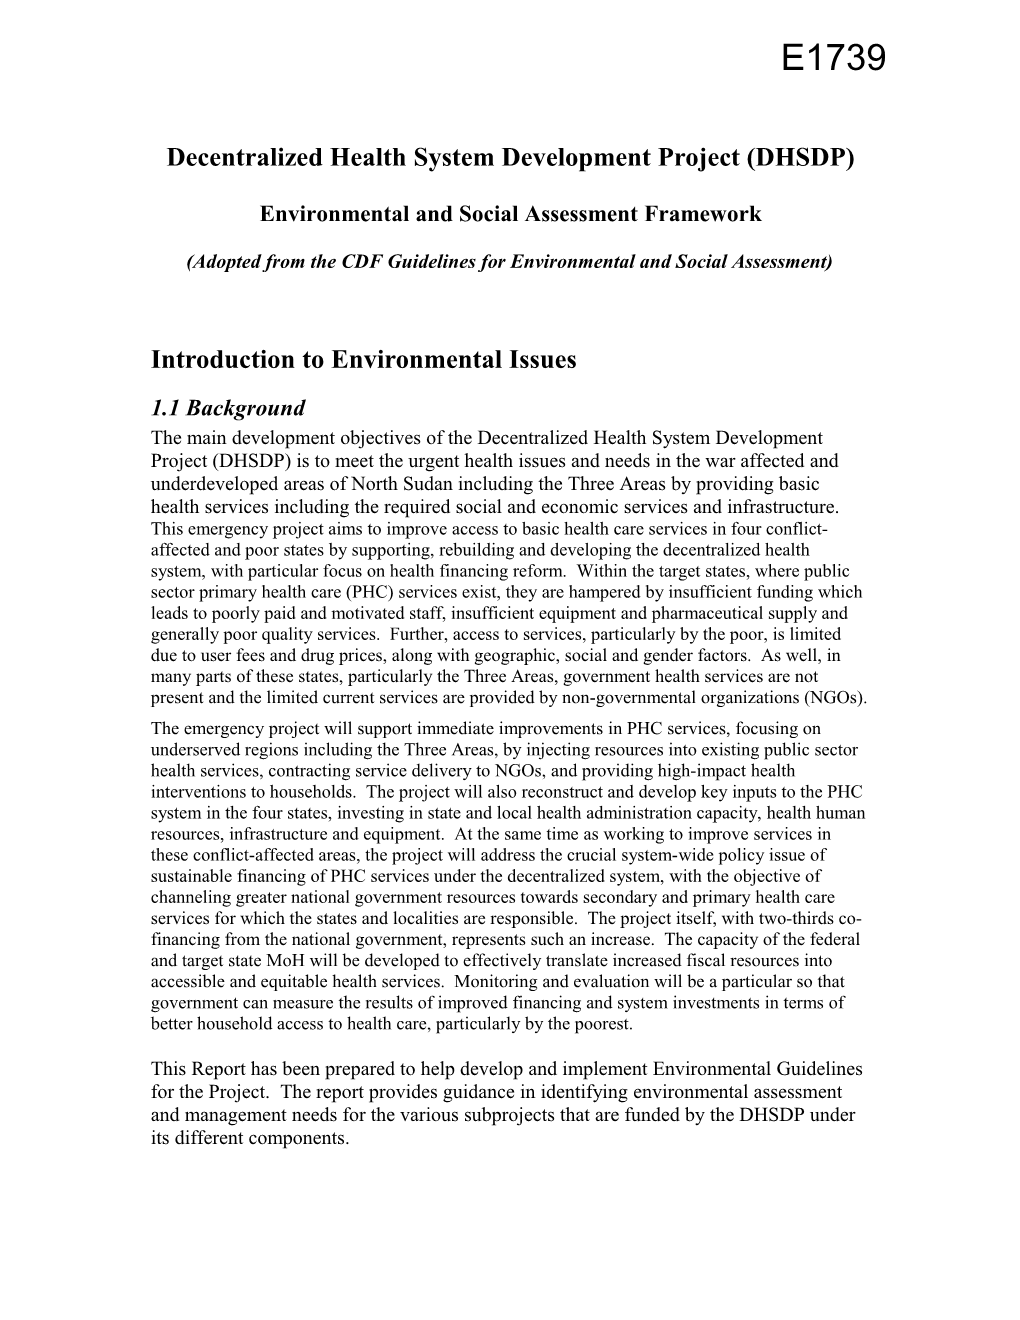 Environmental and Social Assessment Framework for the Decentralized Health System Development